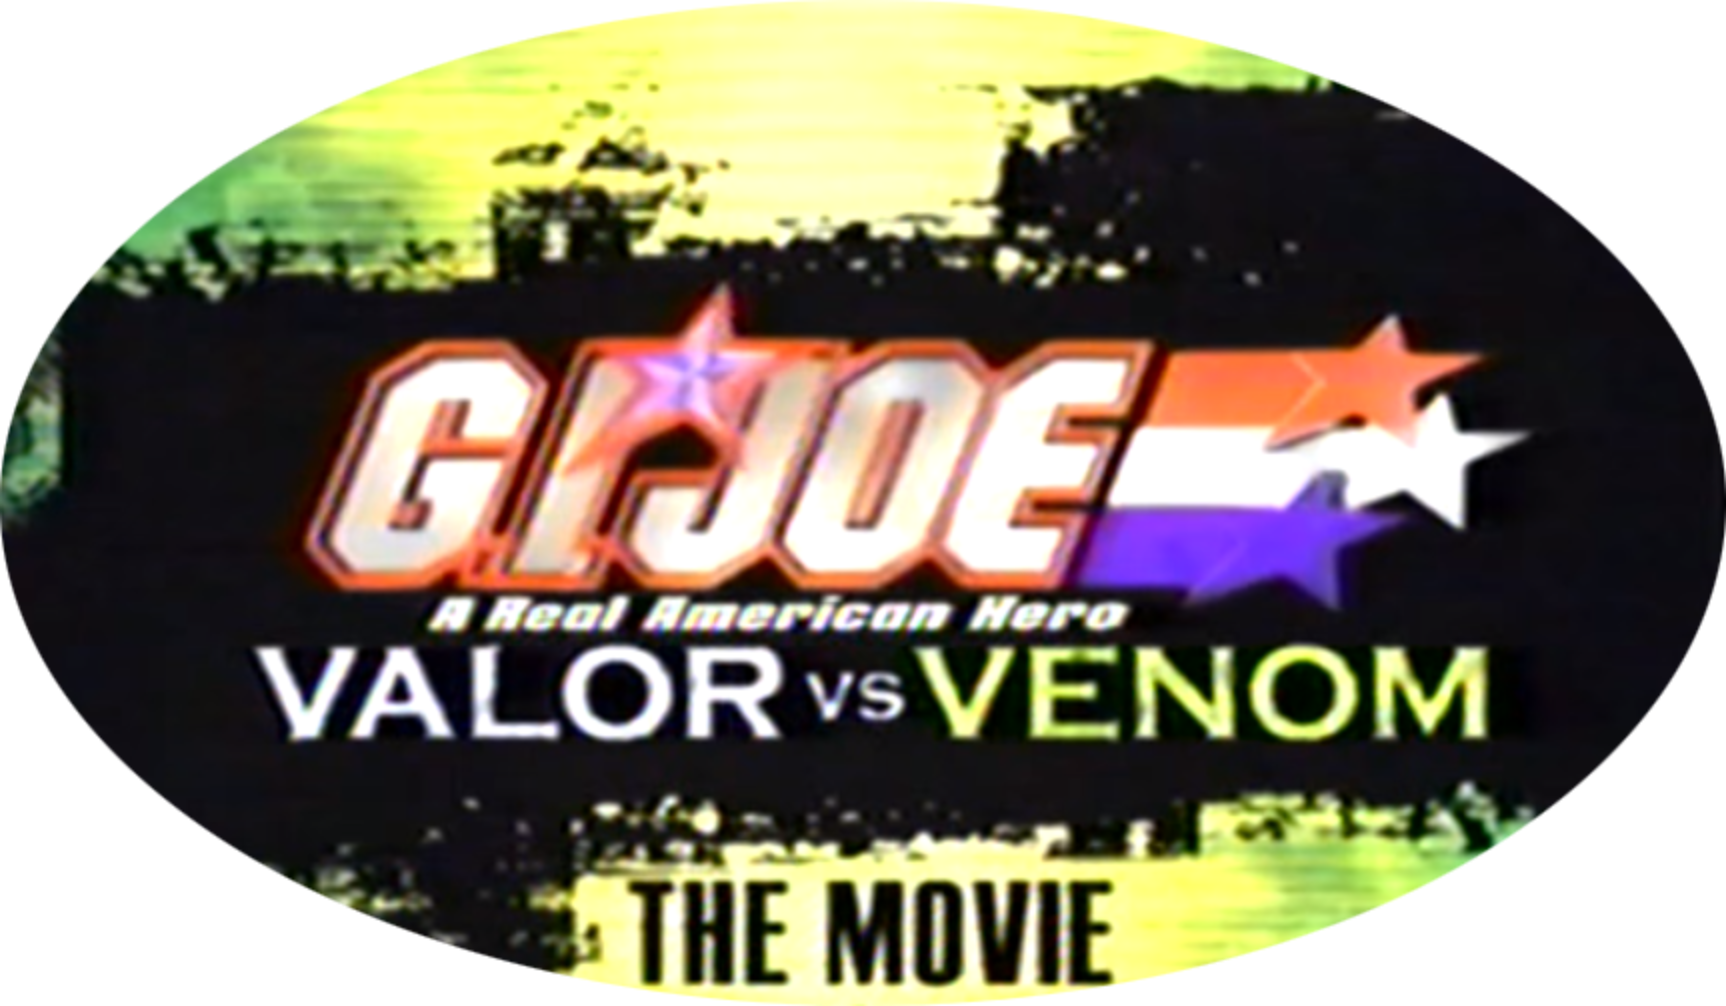 G.I. Joe: Valor vs. Venom (1 DVD Box Set)